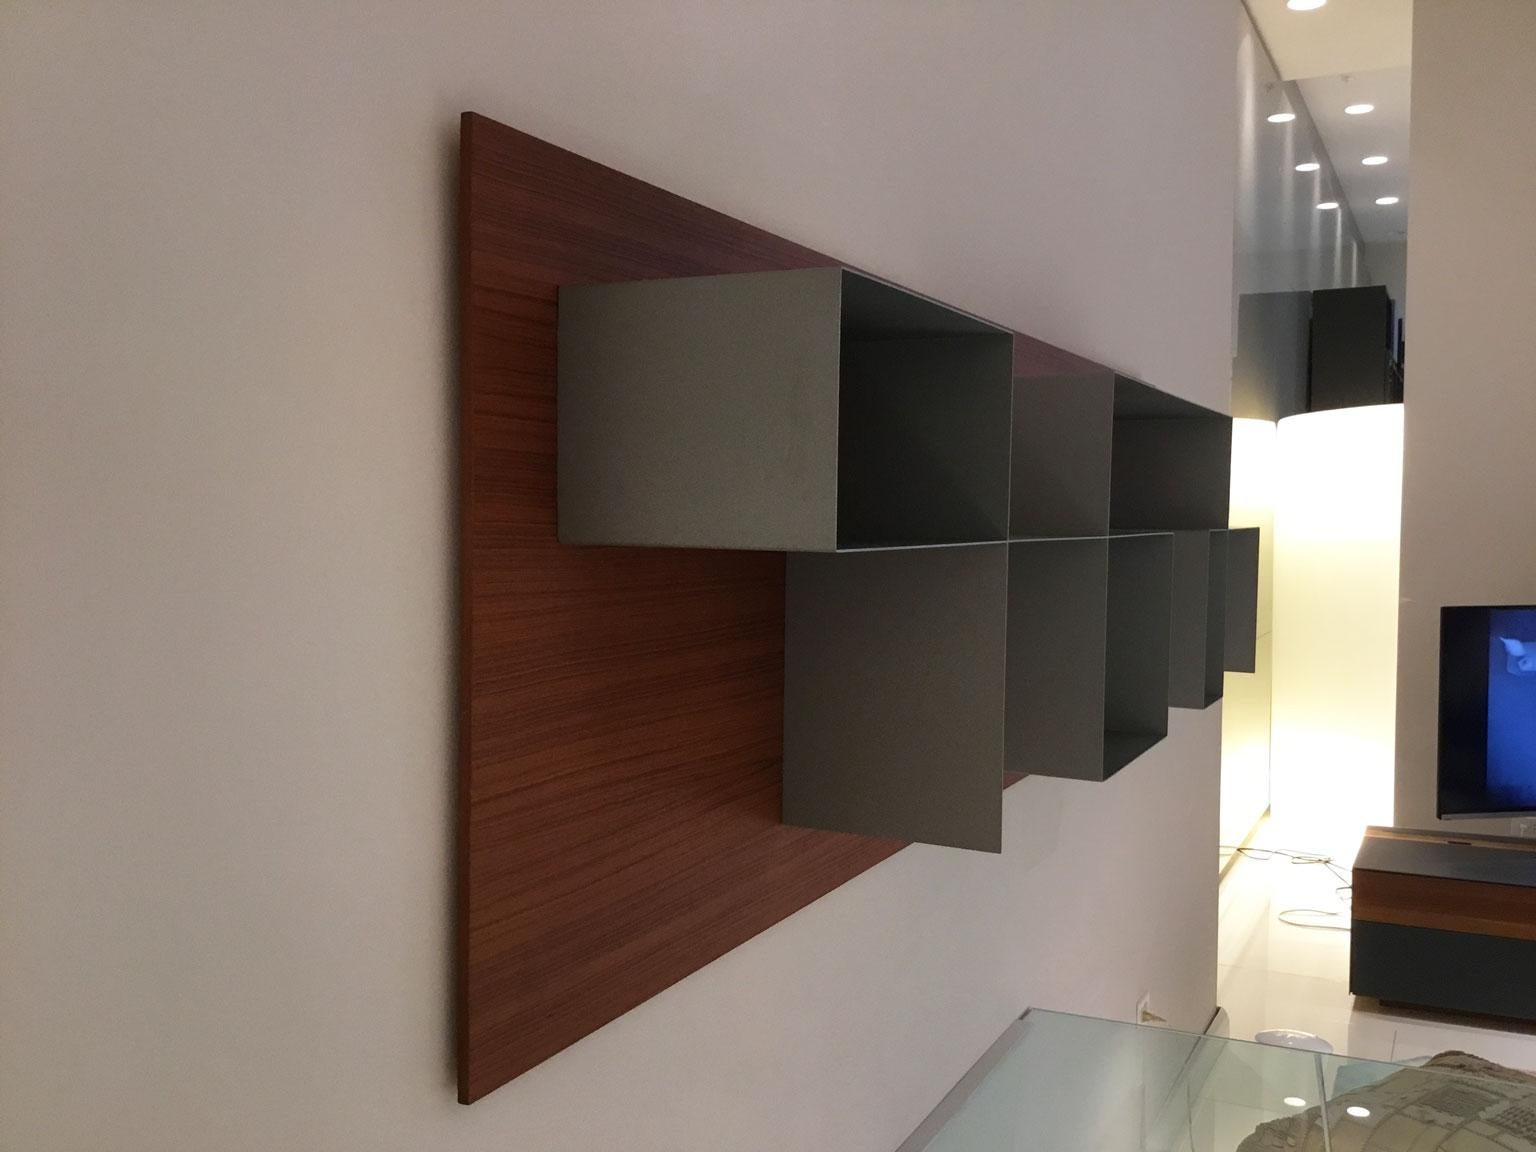 asymmetrical shelves